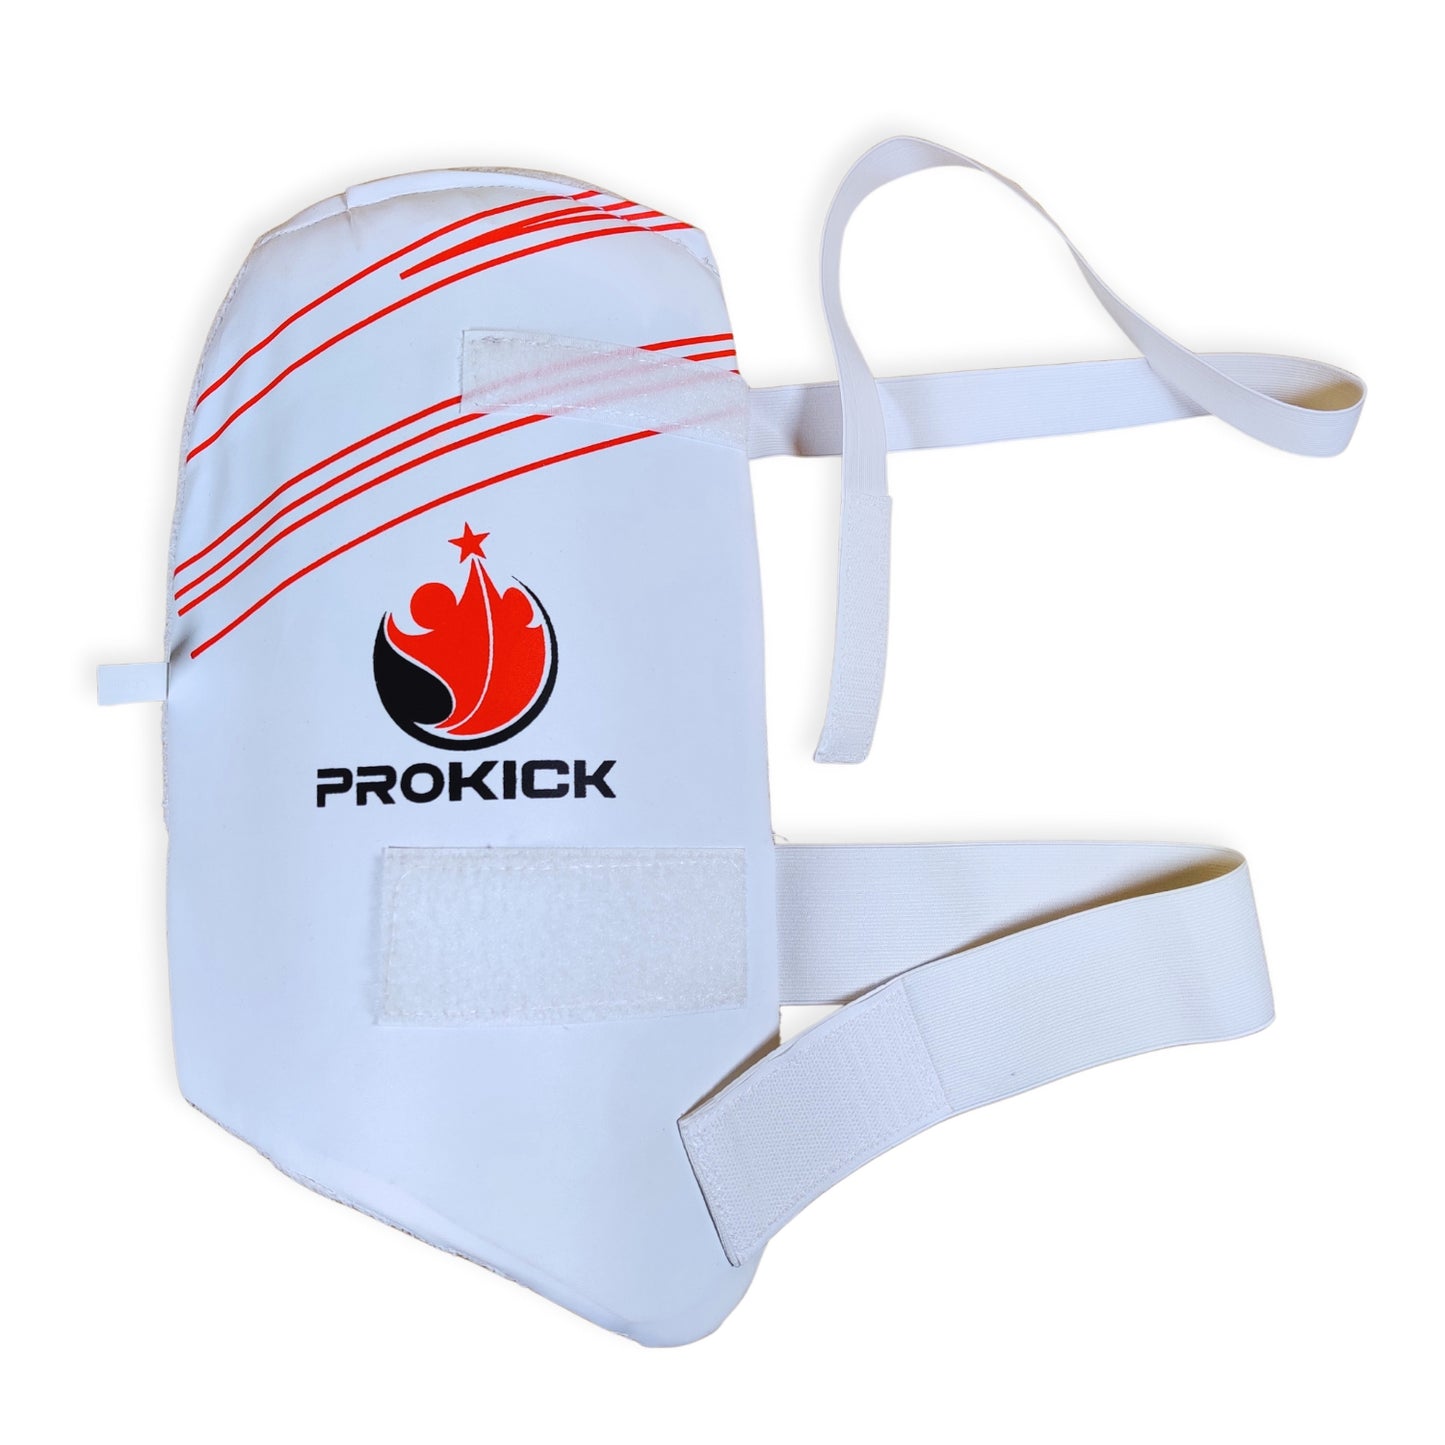 Prokick Instinct Right Hand Cricket Thigh Pad - Best Price online Prokicksports.com